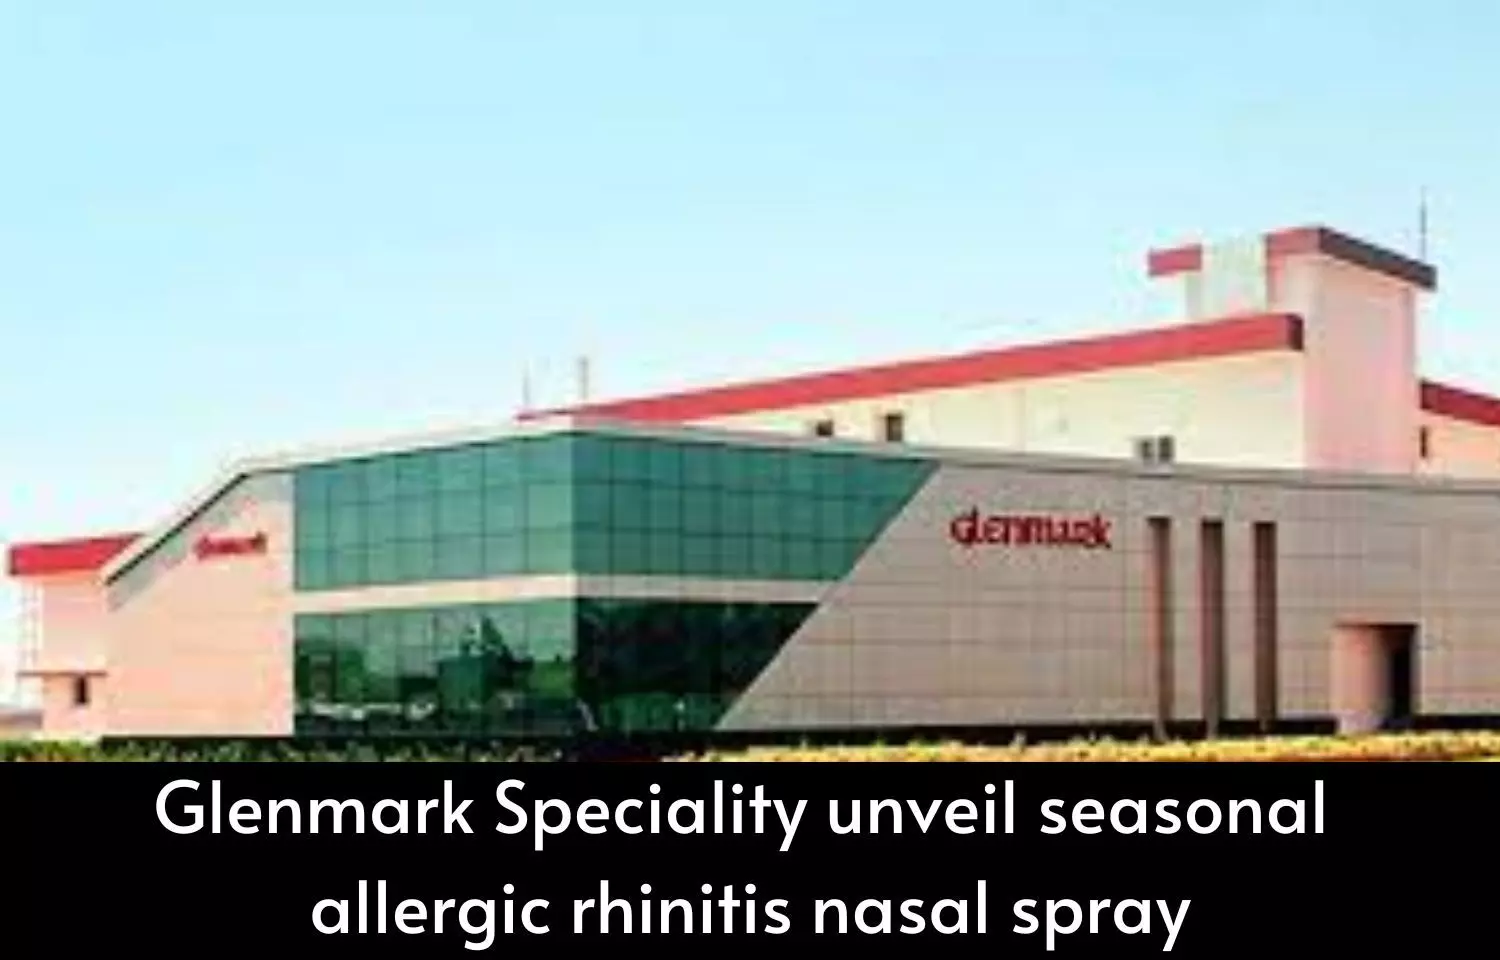 Glenmark Specialty, Hikma Pharma launch seasonal allergic rhinitis nasal spray in US